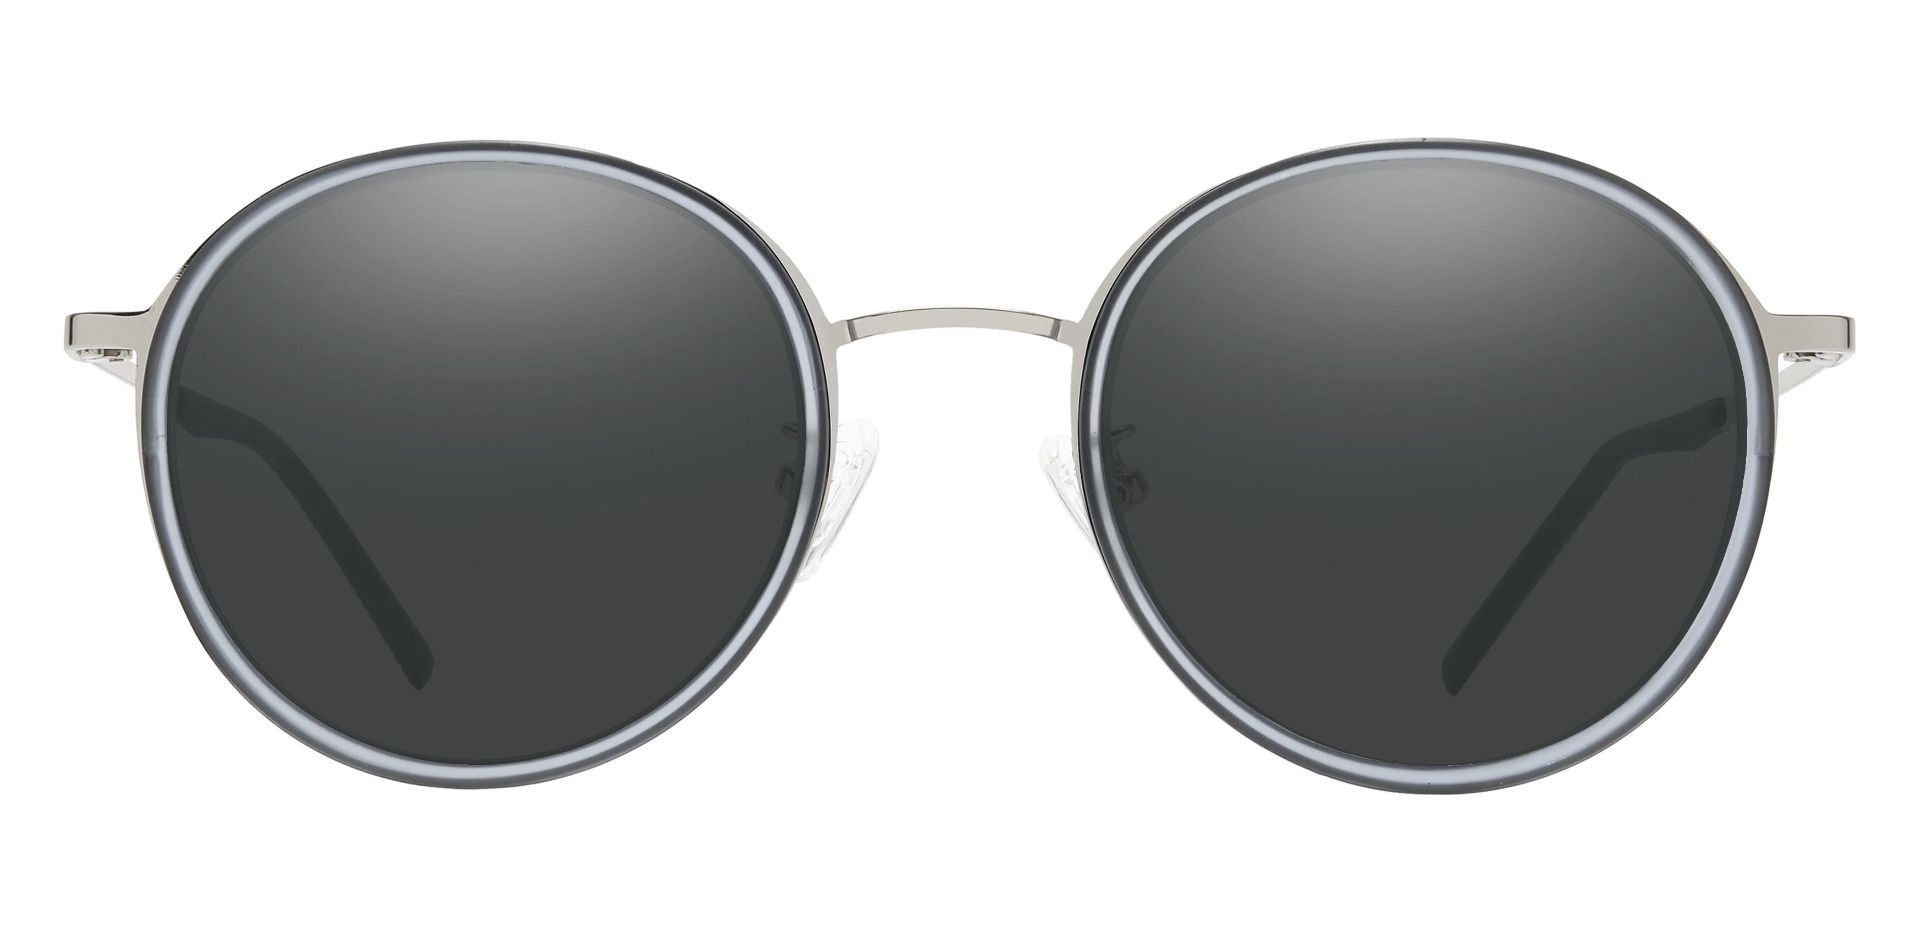 Brunswick Round Prescription Sunglasses - Gray Frame With Gray Lenses